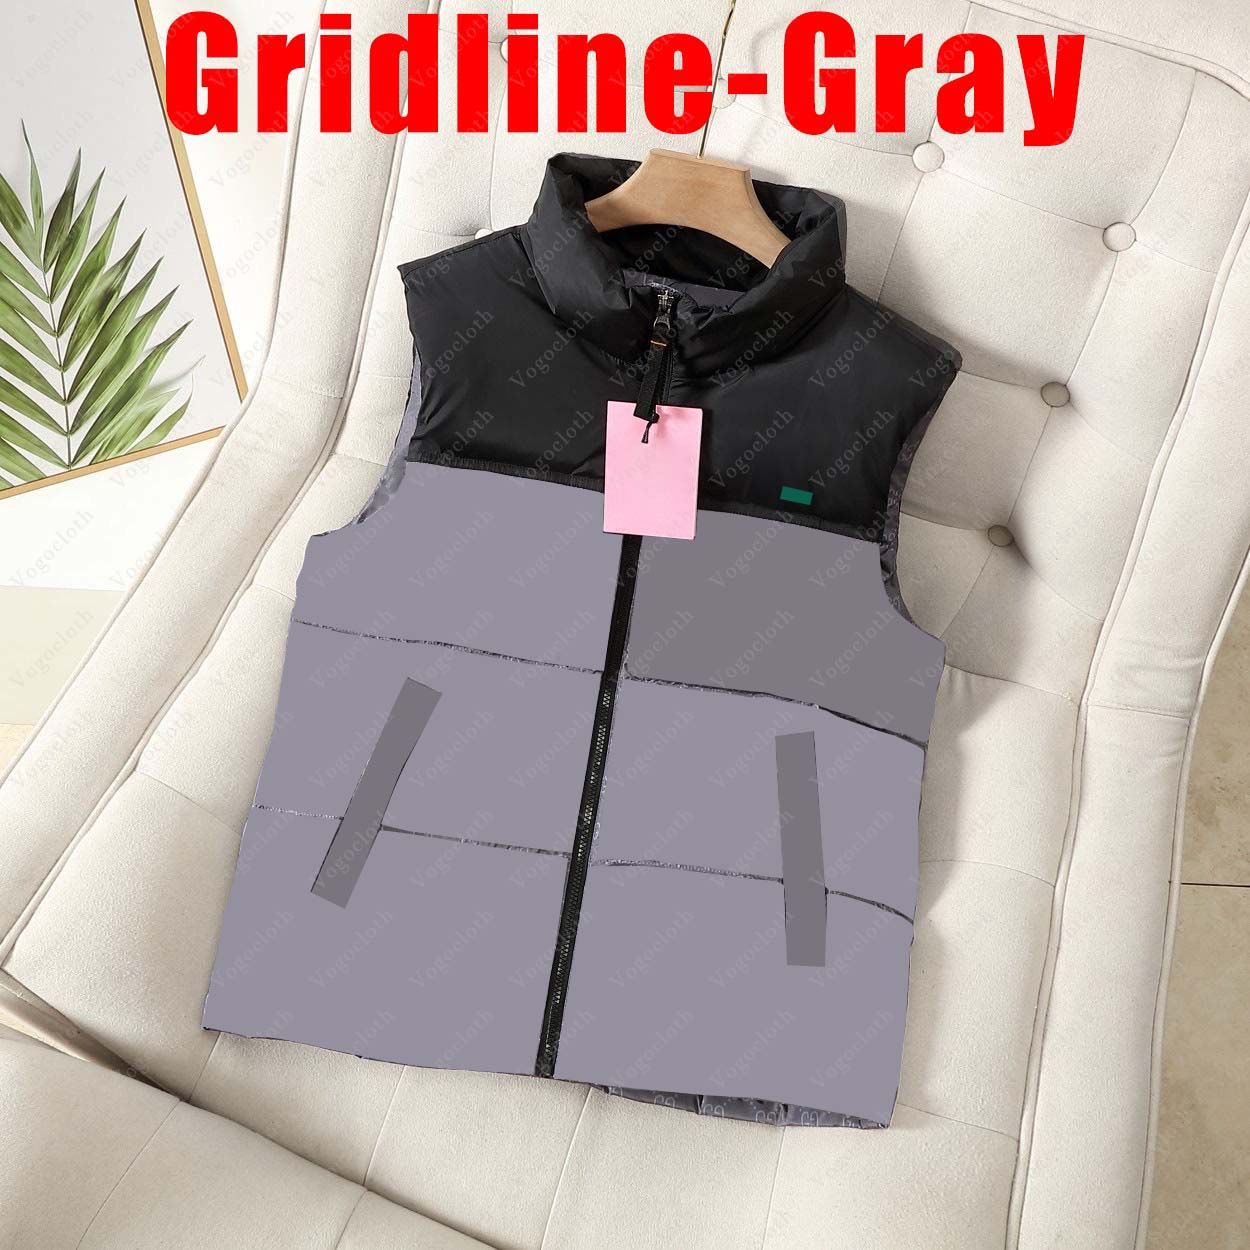 Gridline-Gray